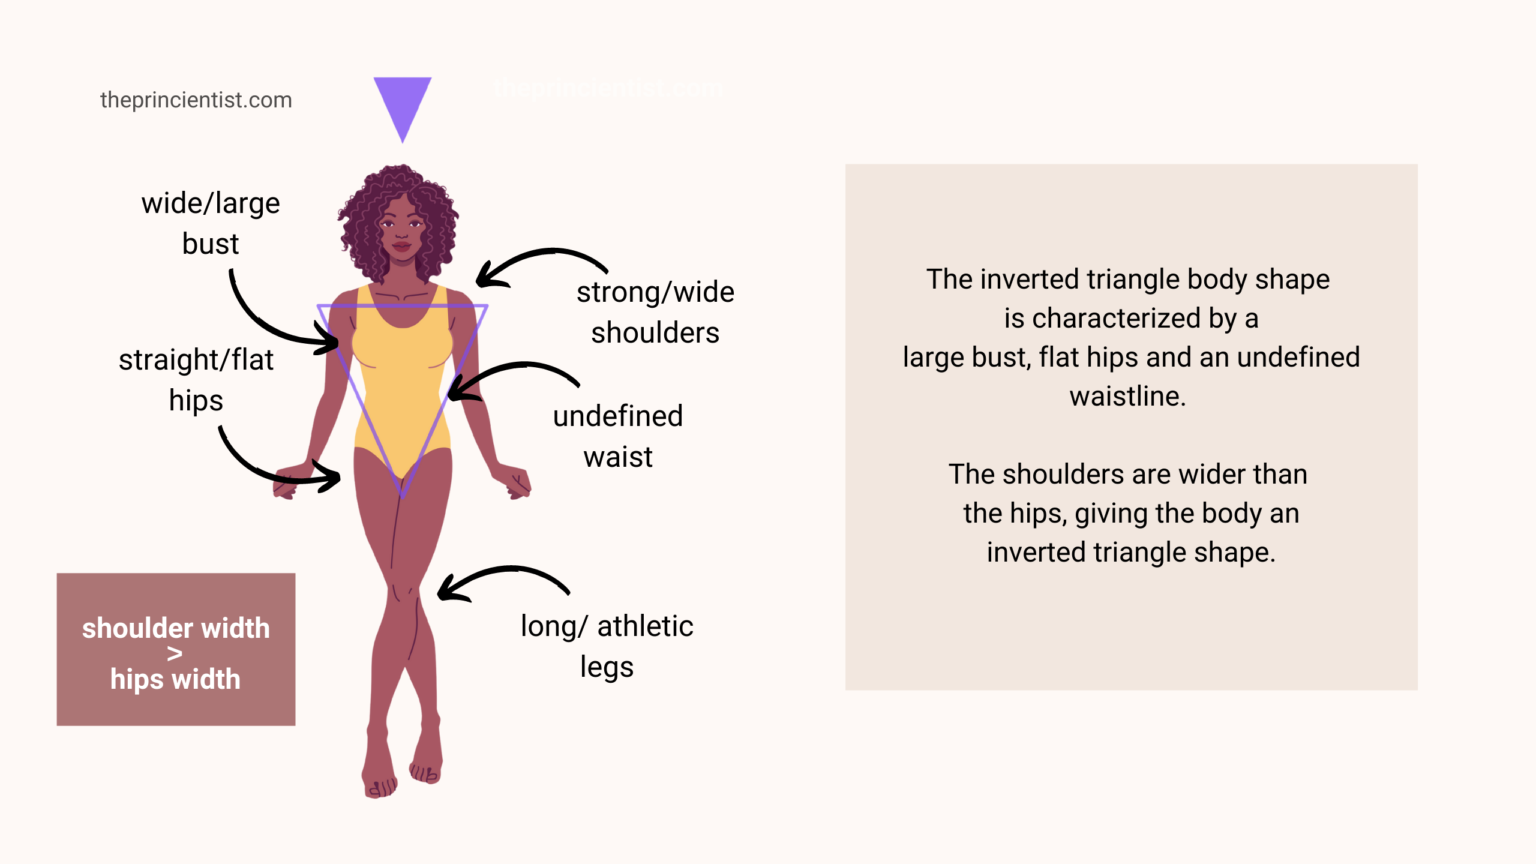 dress the inverted triangle body shape - characteristics